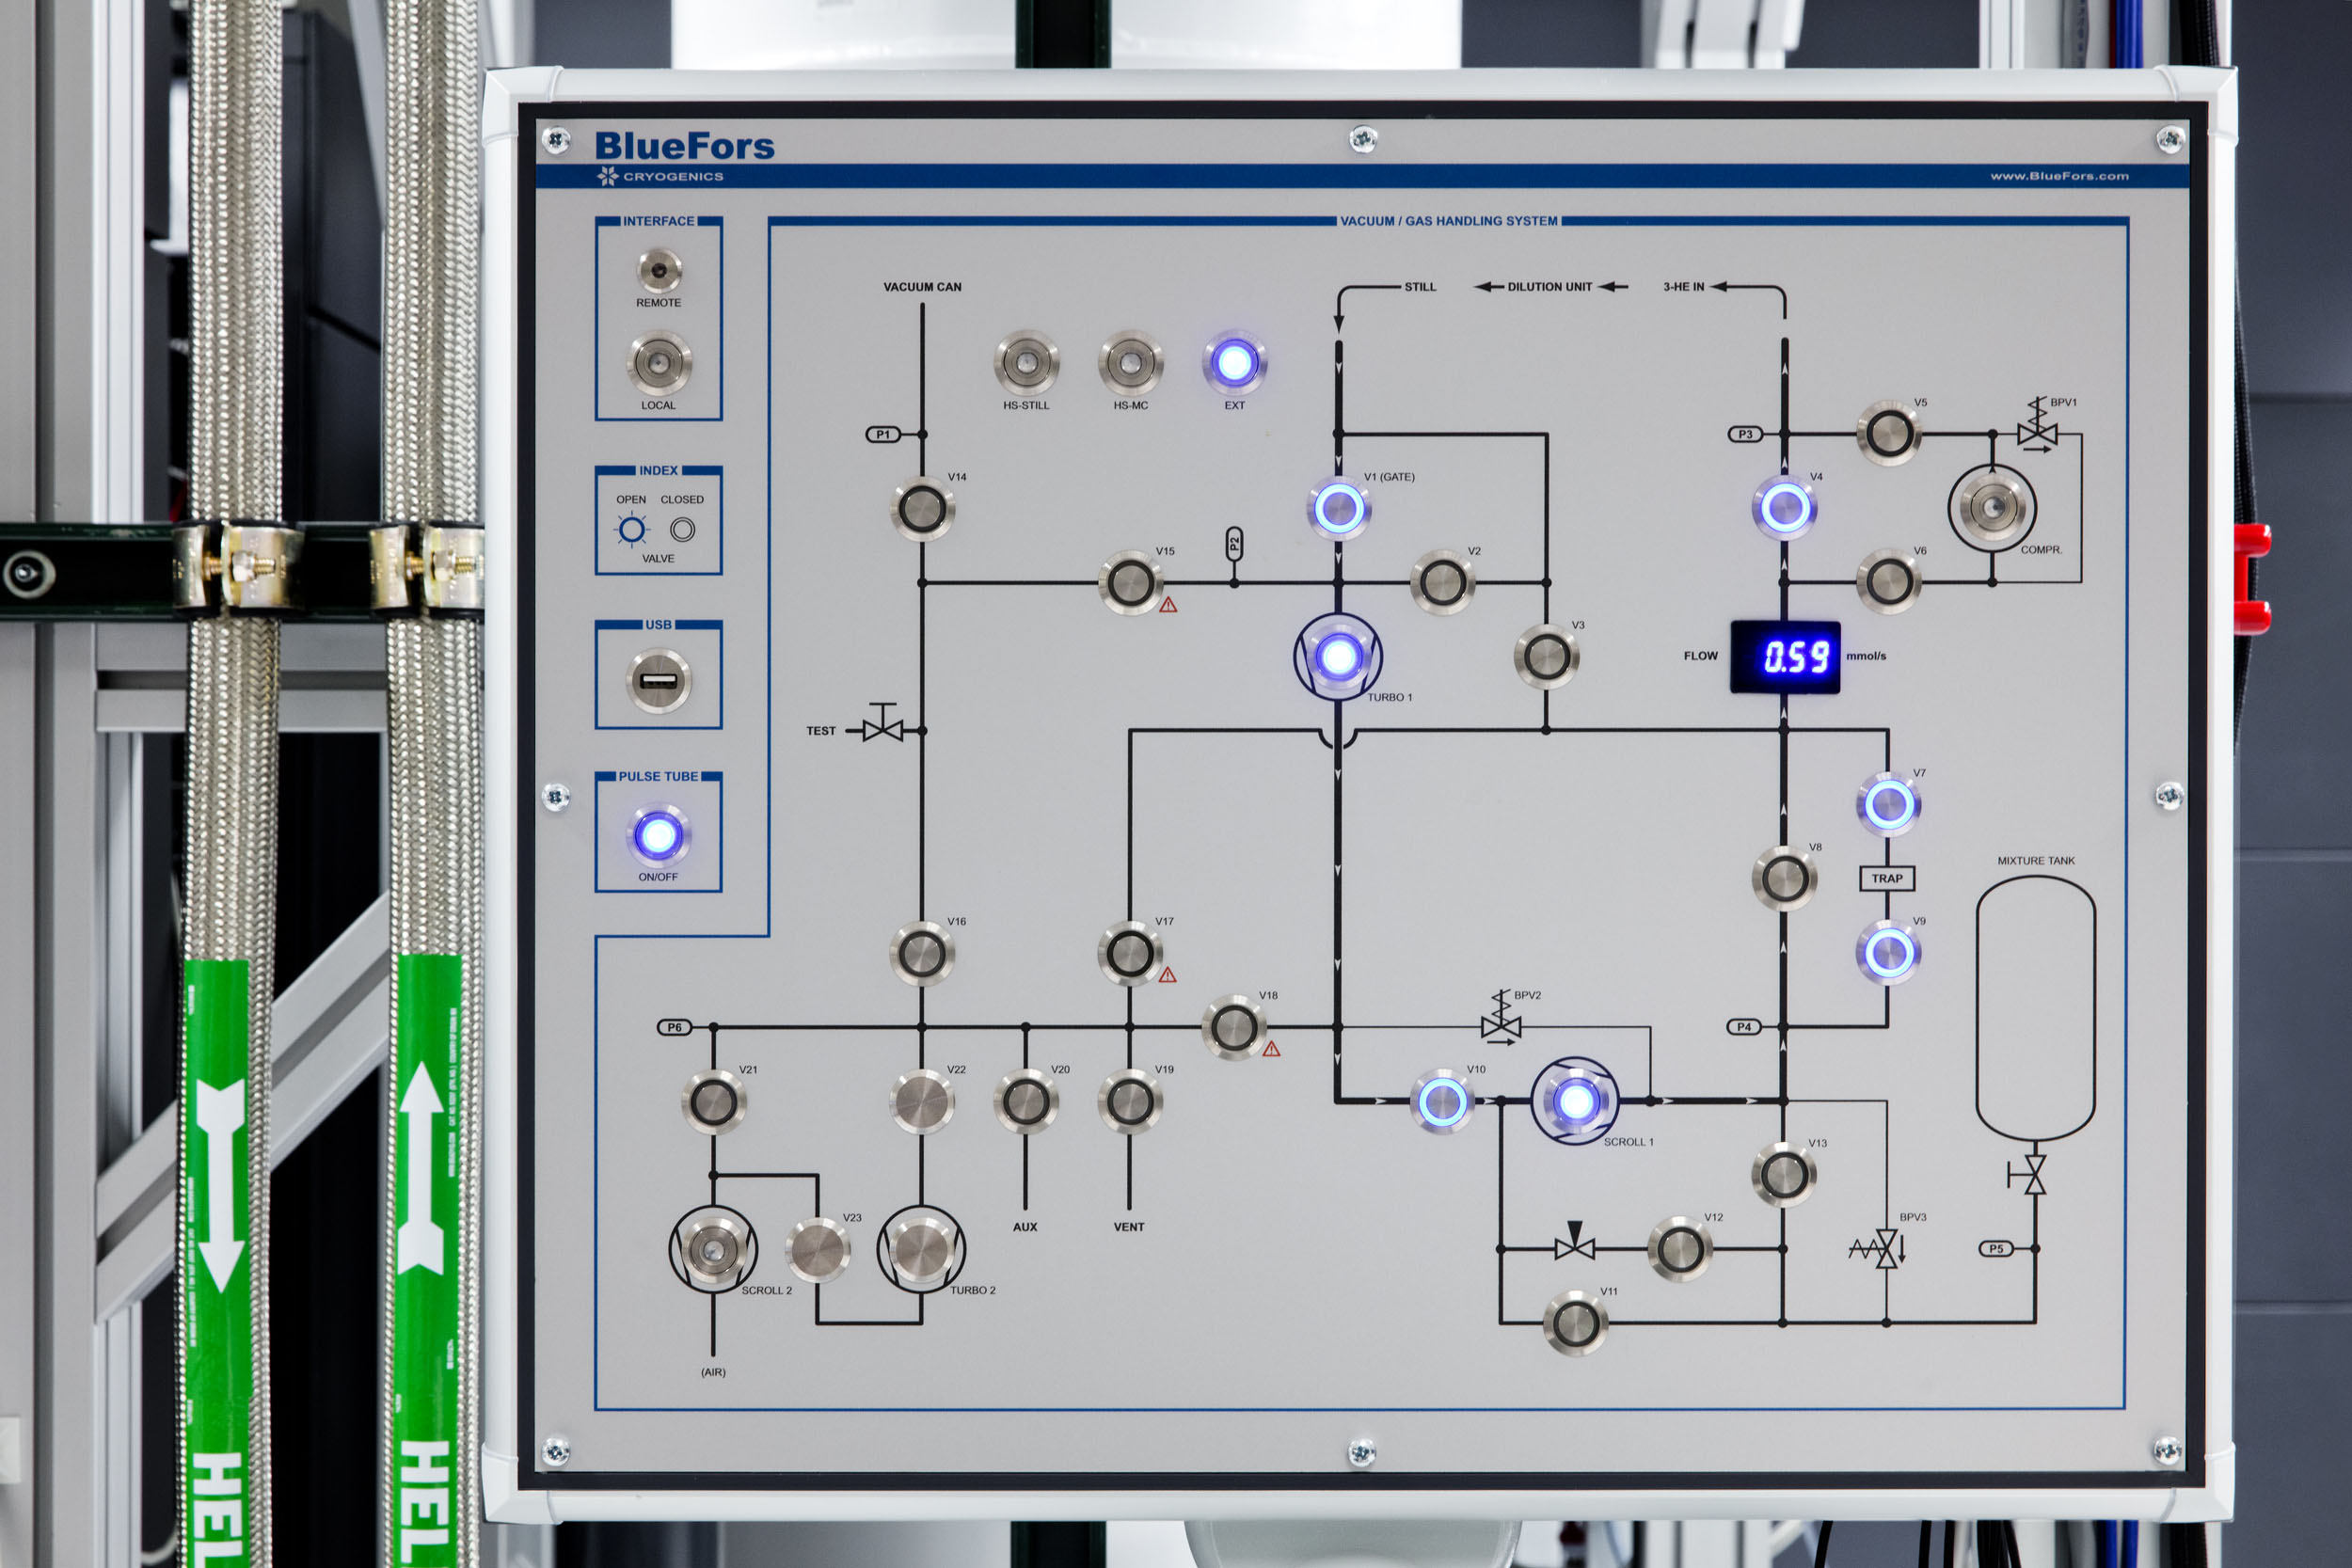 IBM Q system control panel